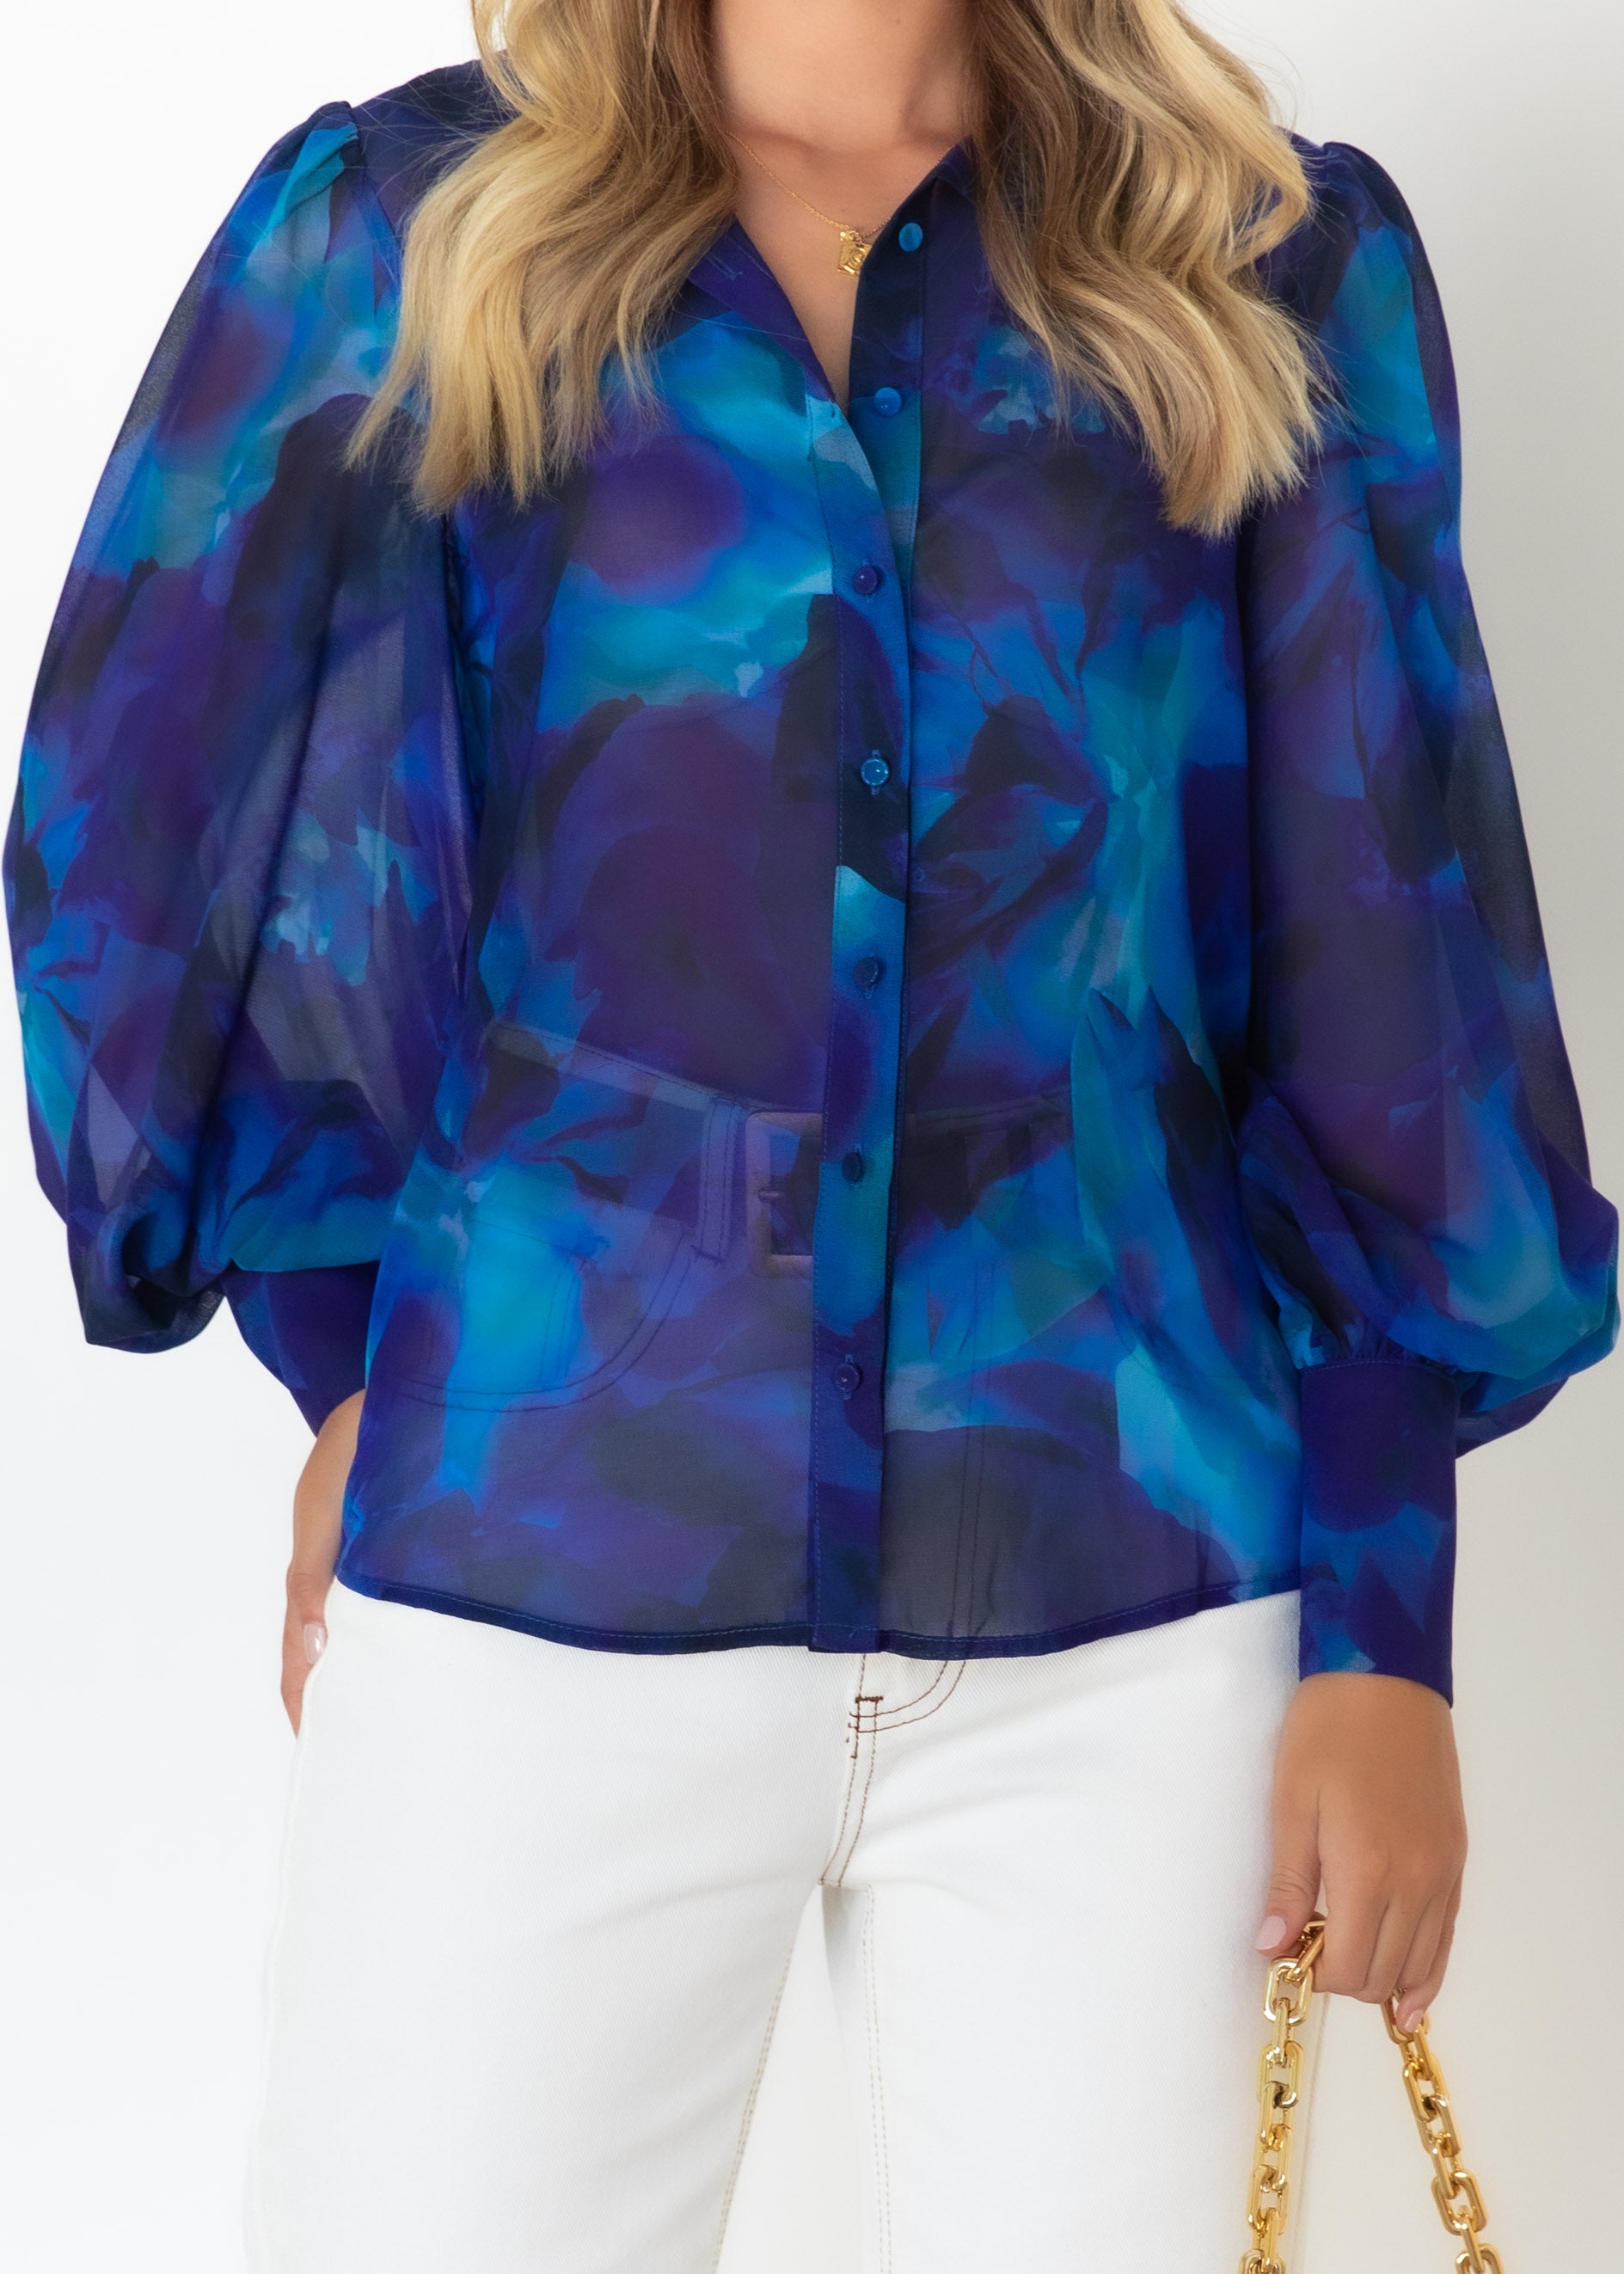 Calista Shirt - Cobalt Floral